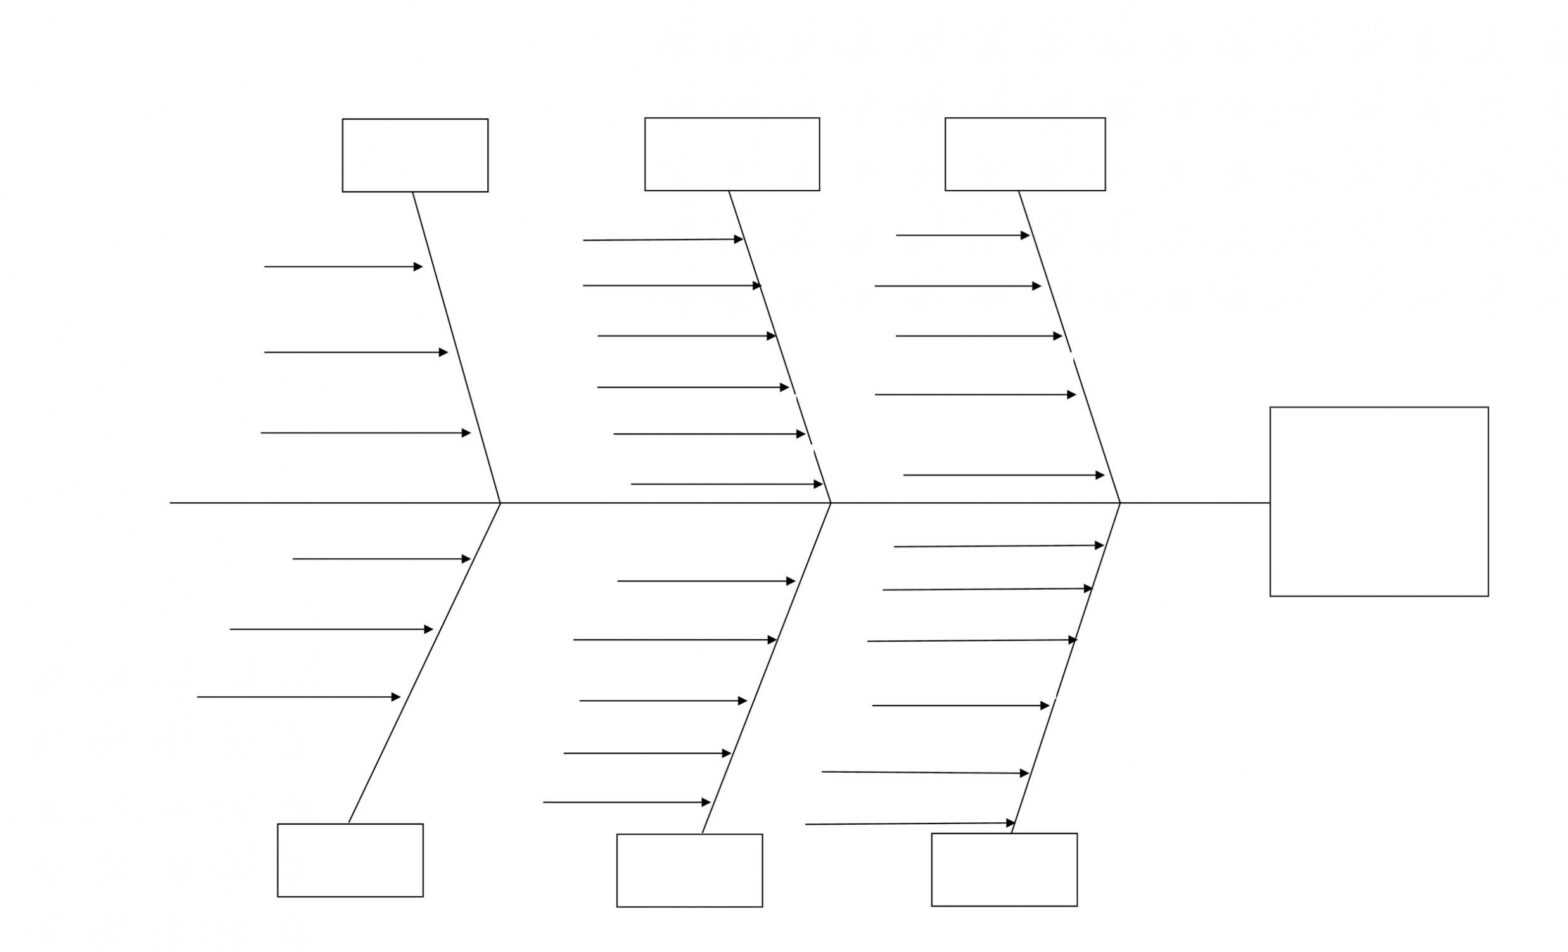 47 Great Fishbone Diagram Templates &amp; Examples [Word, Excel] regarding Blank Fishbone Diagram Template Word